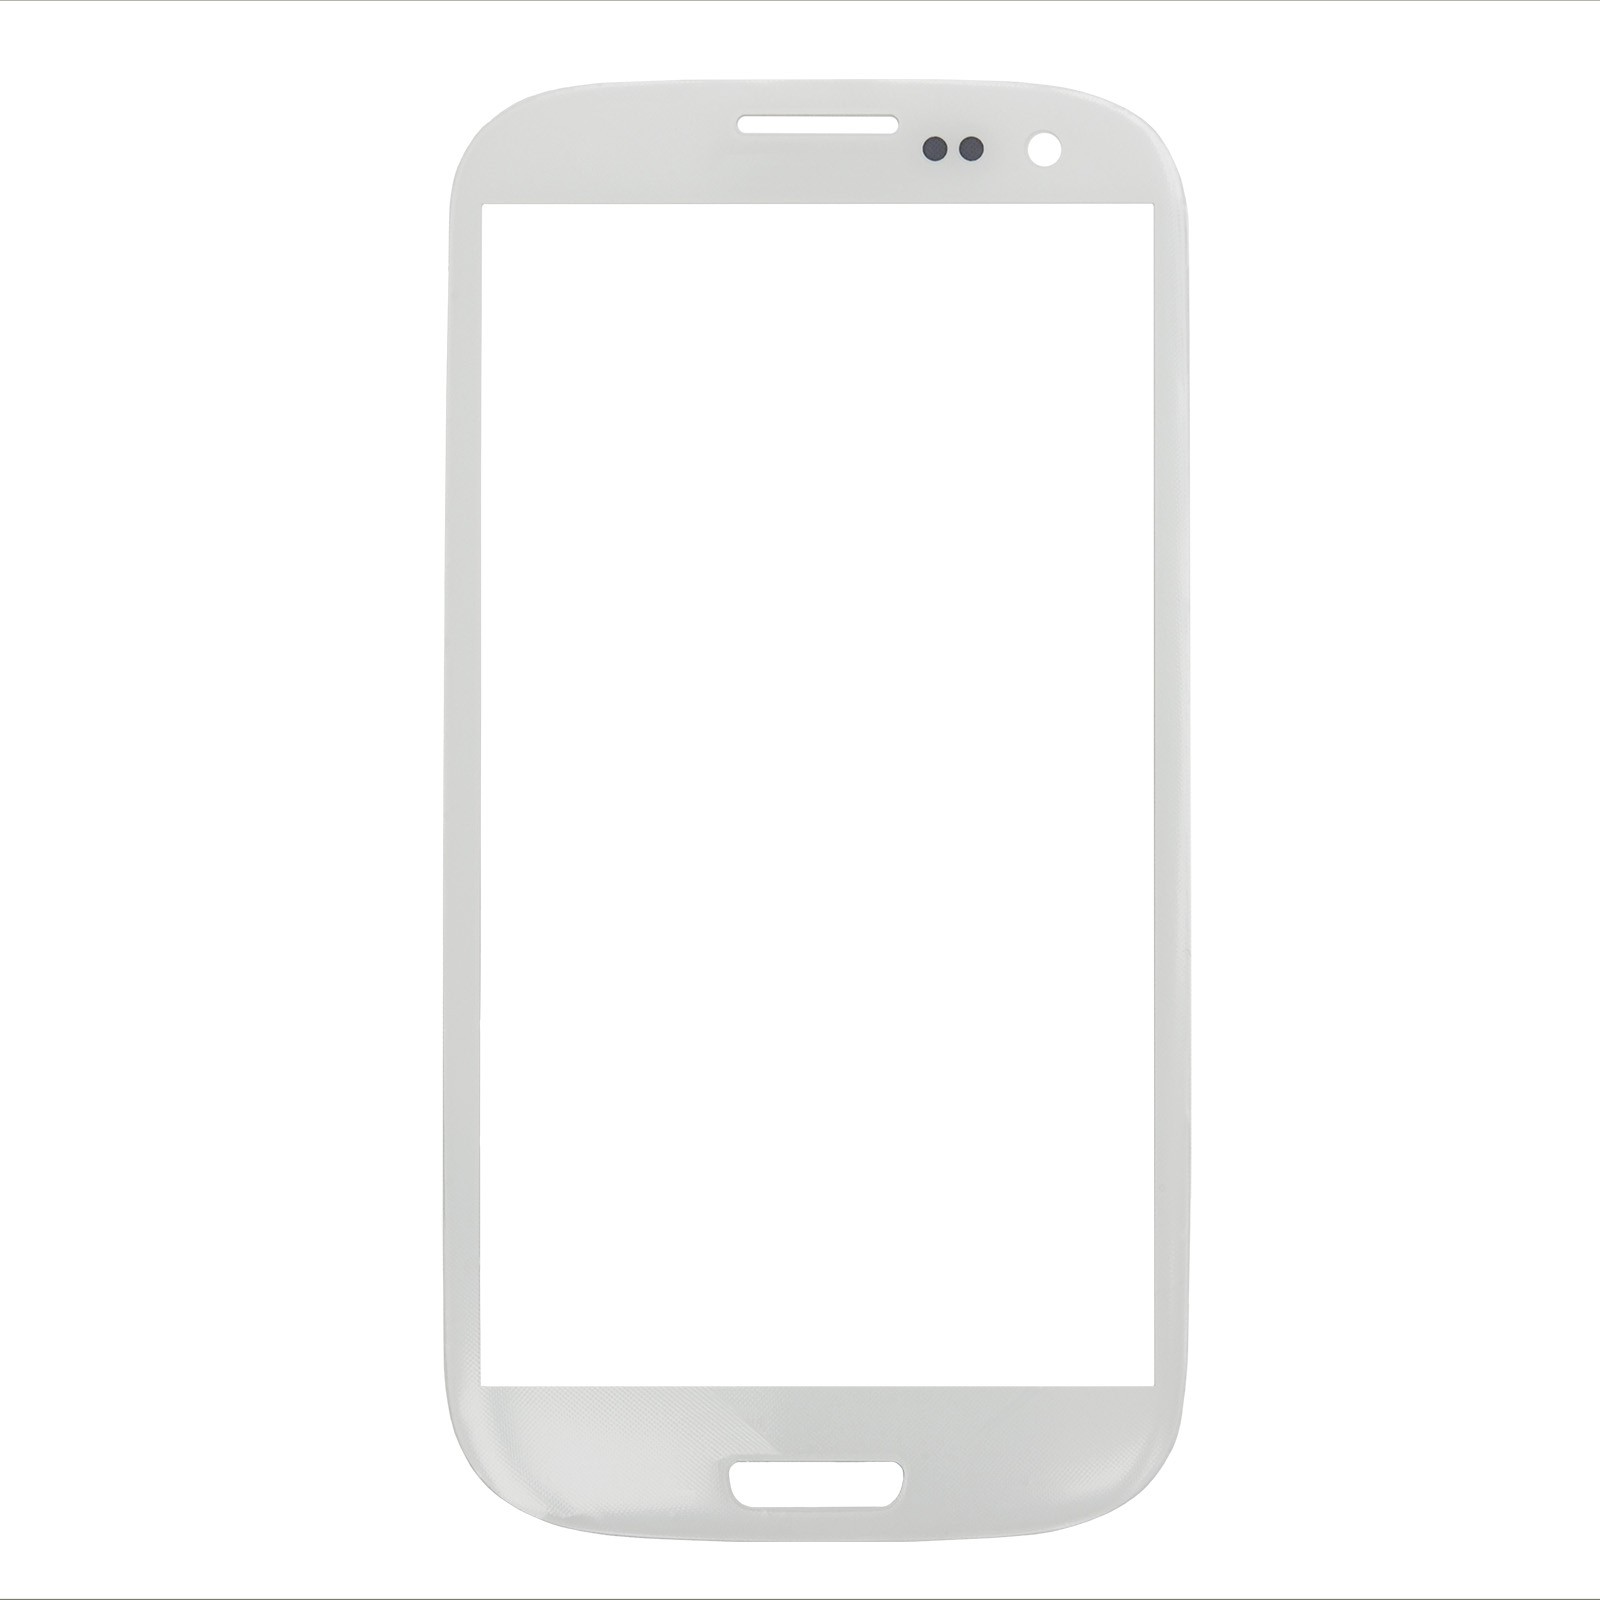 Cтекло для переклеивания Samsung Galaxy S3 (i9300) белое